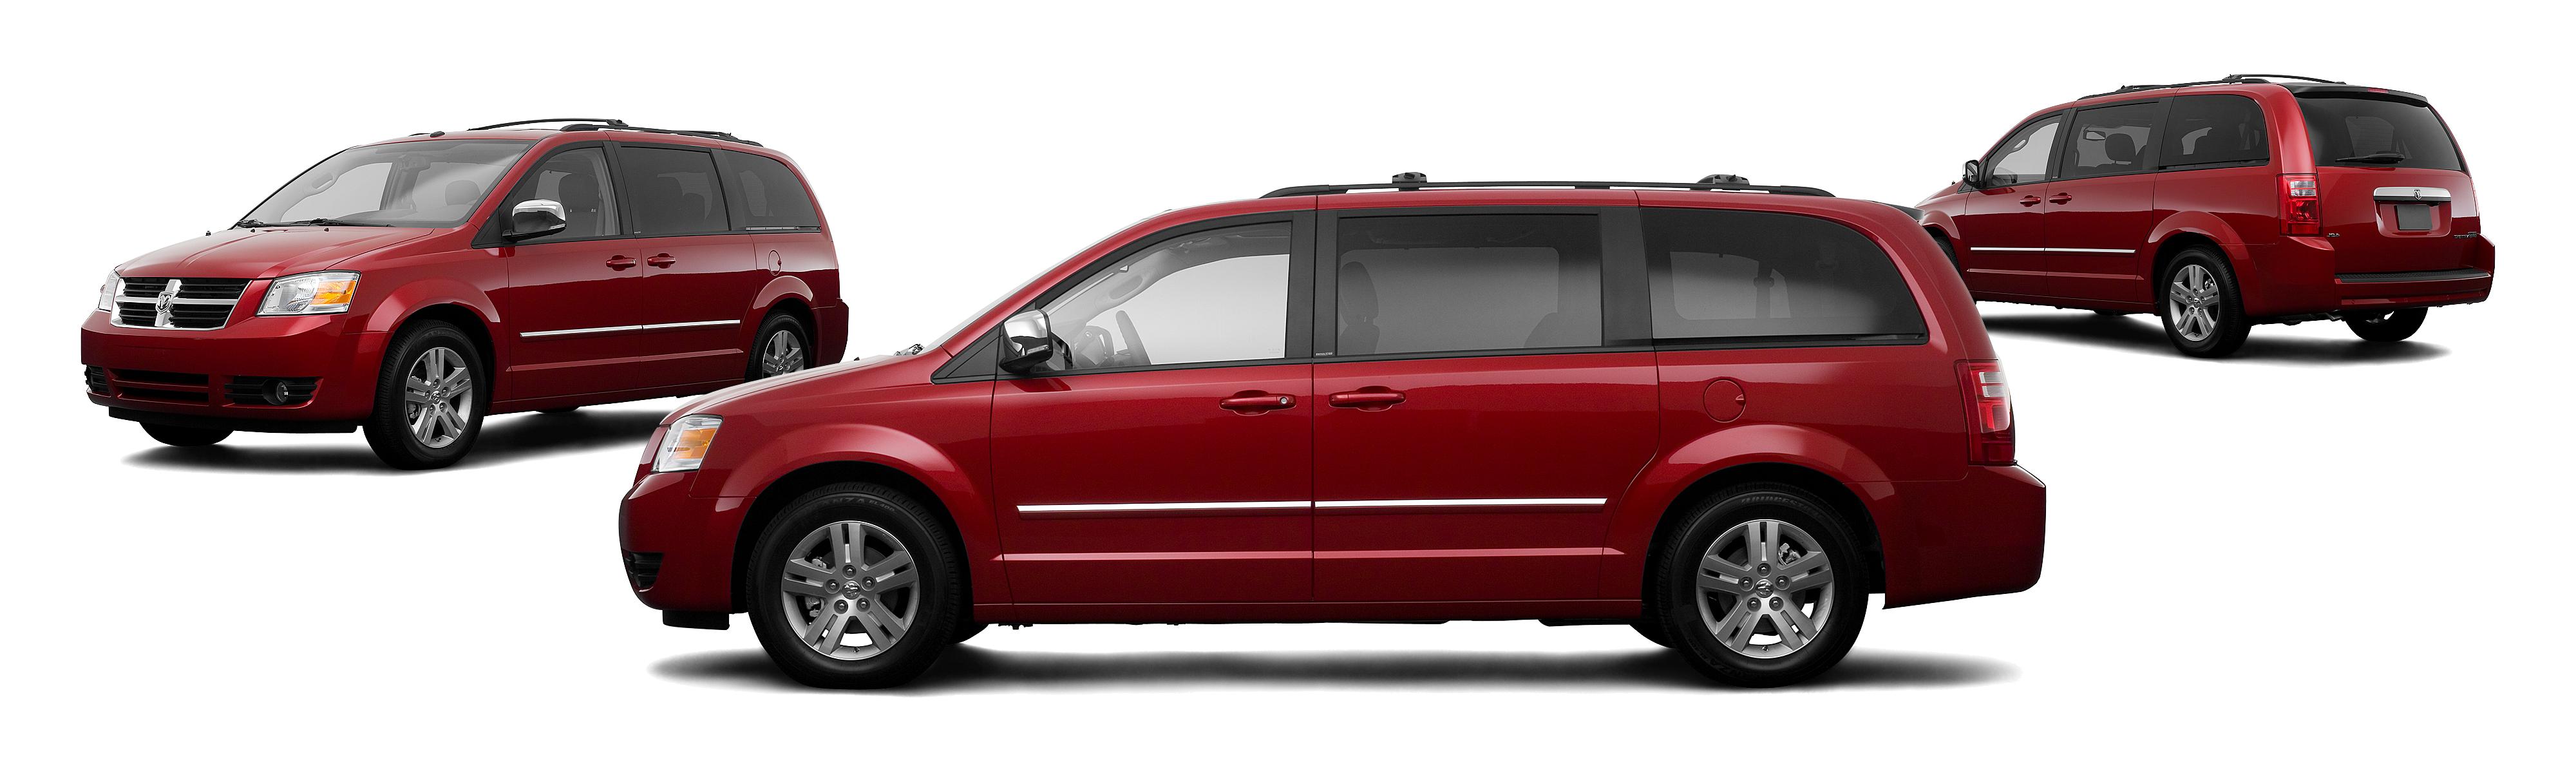 2008 Dodge Grand Caravan SXT Extended 4dr Mini-Van - Research - GrooveCar